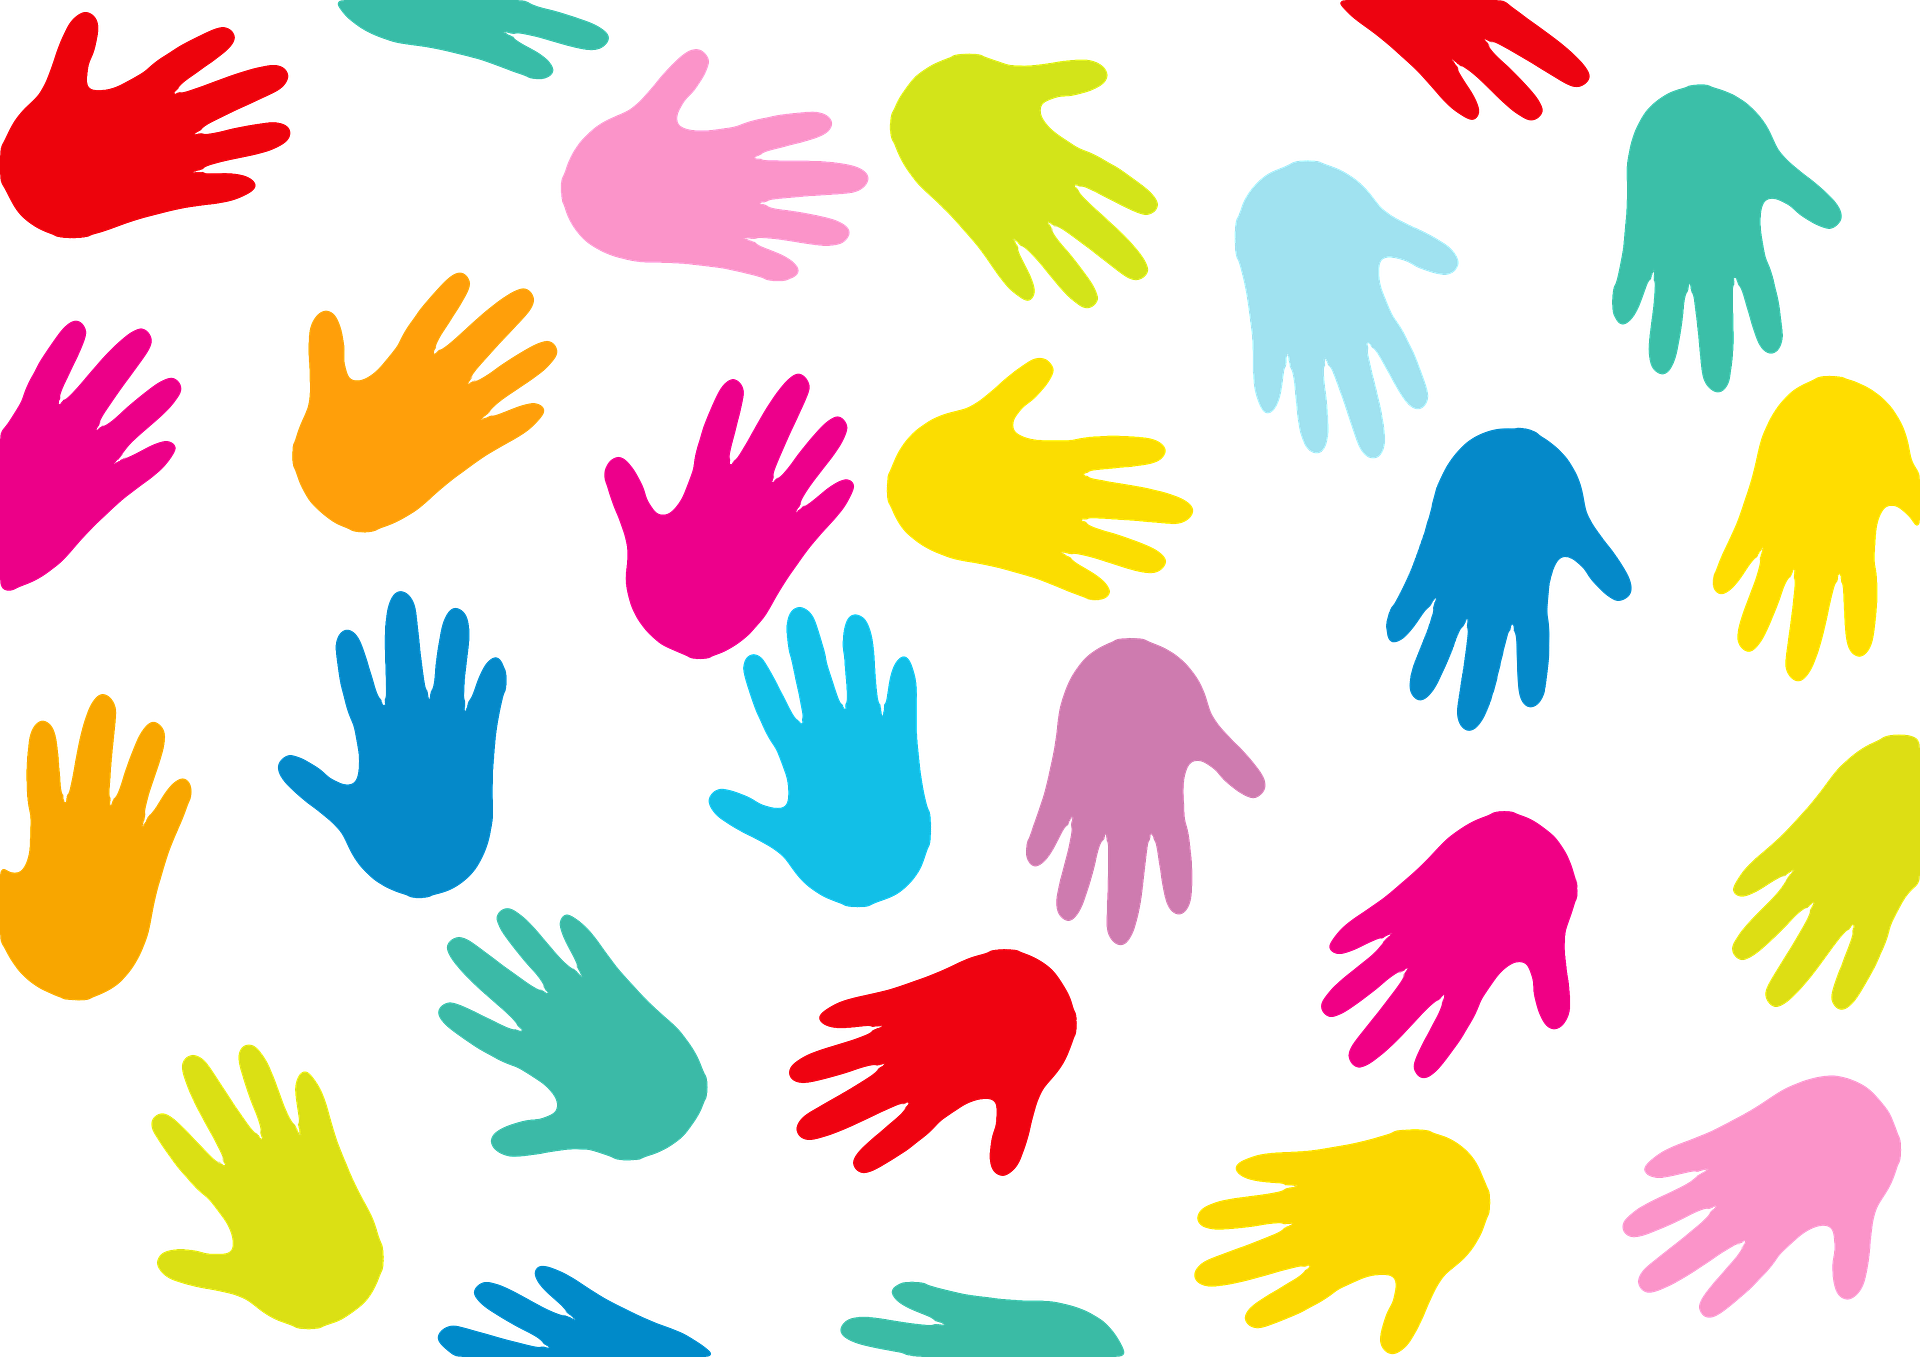 Multicolored hands